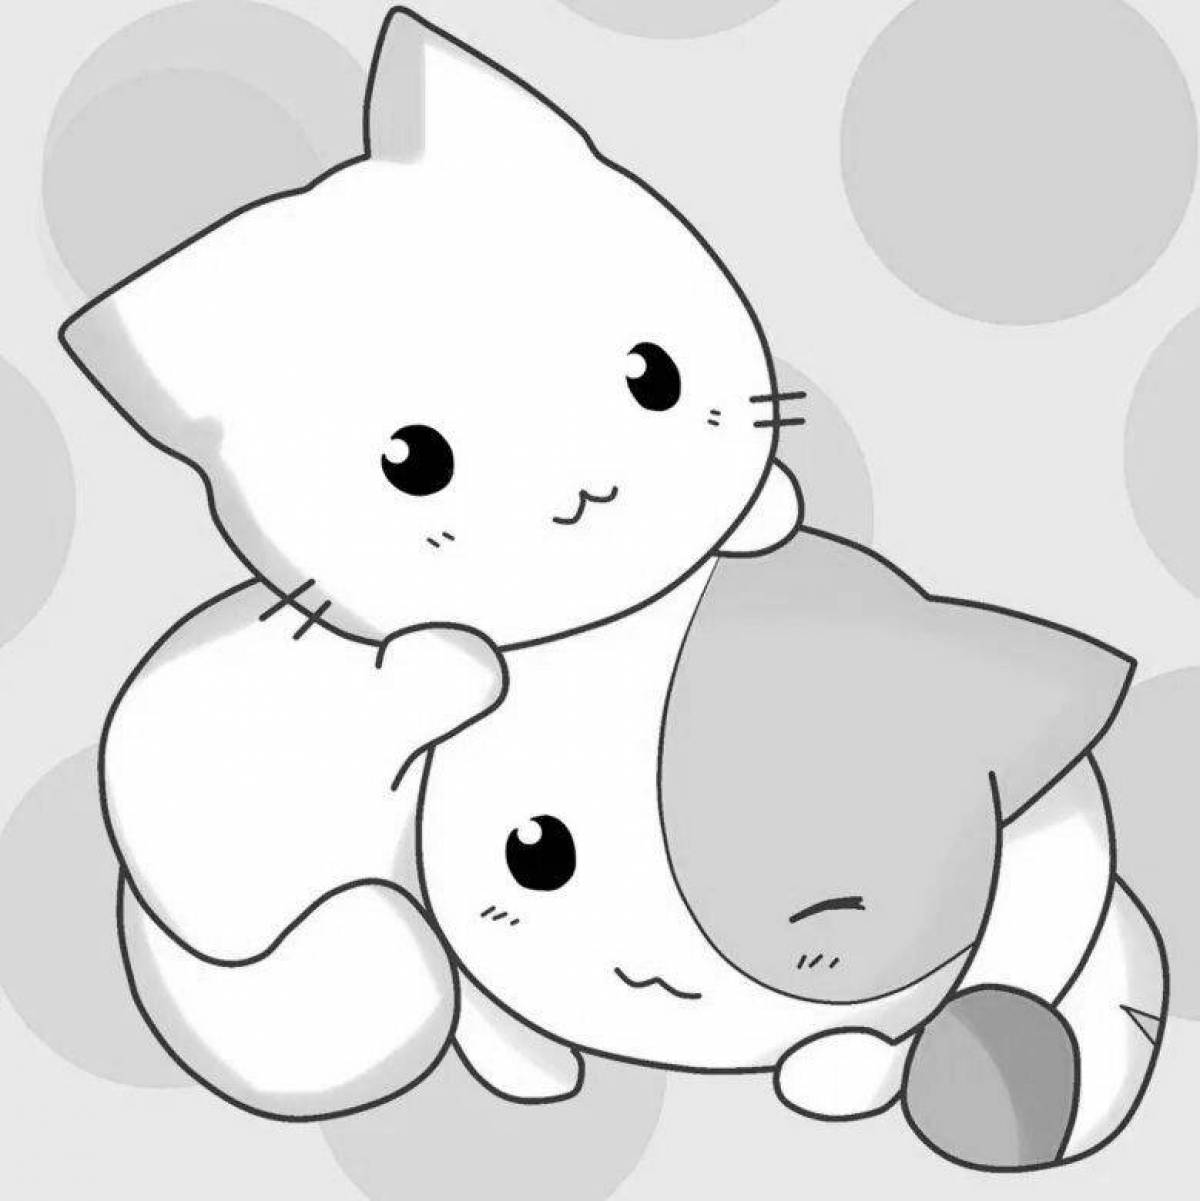 Snuggly kawaii cat coloring page